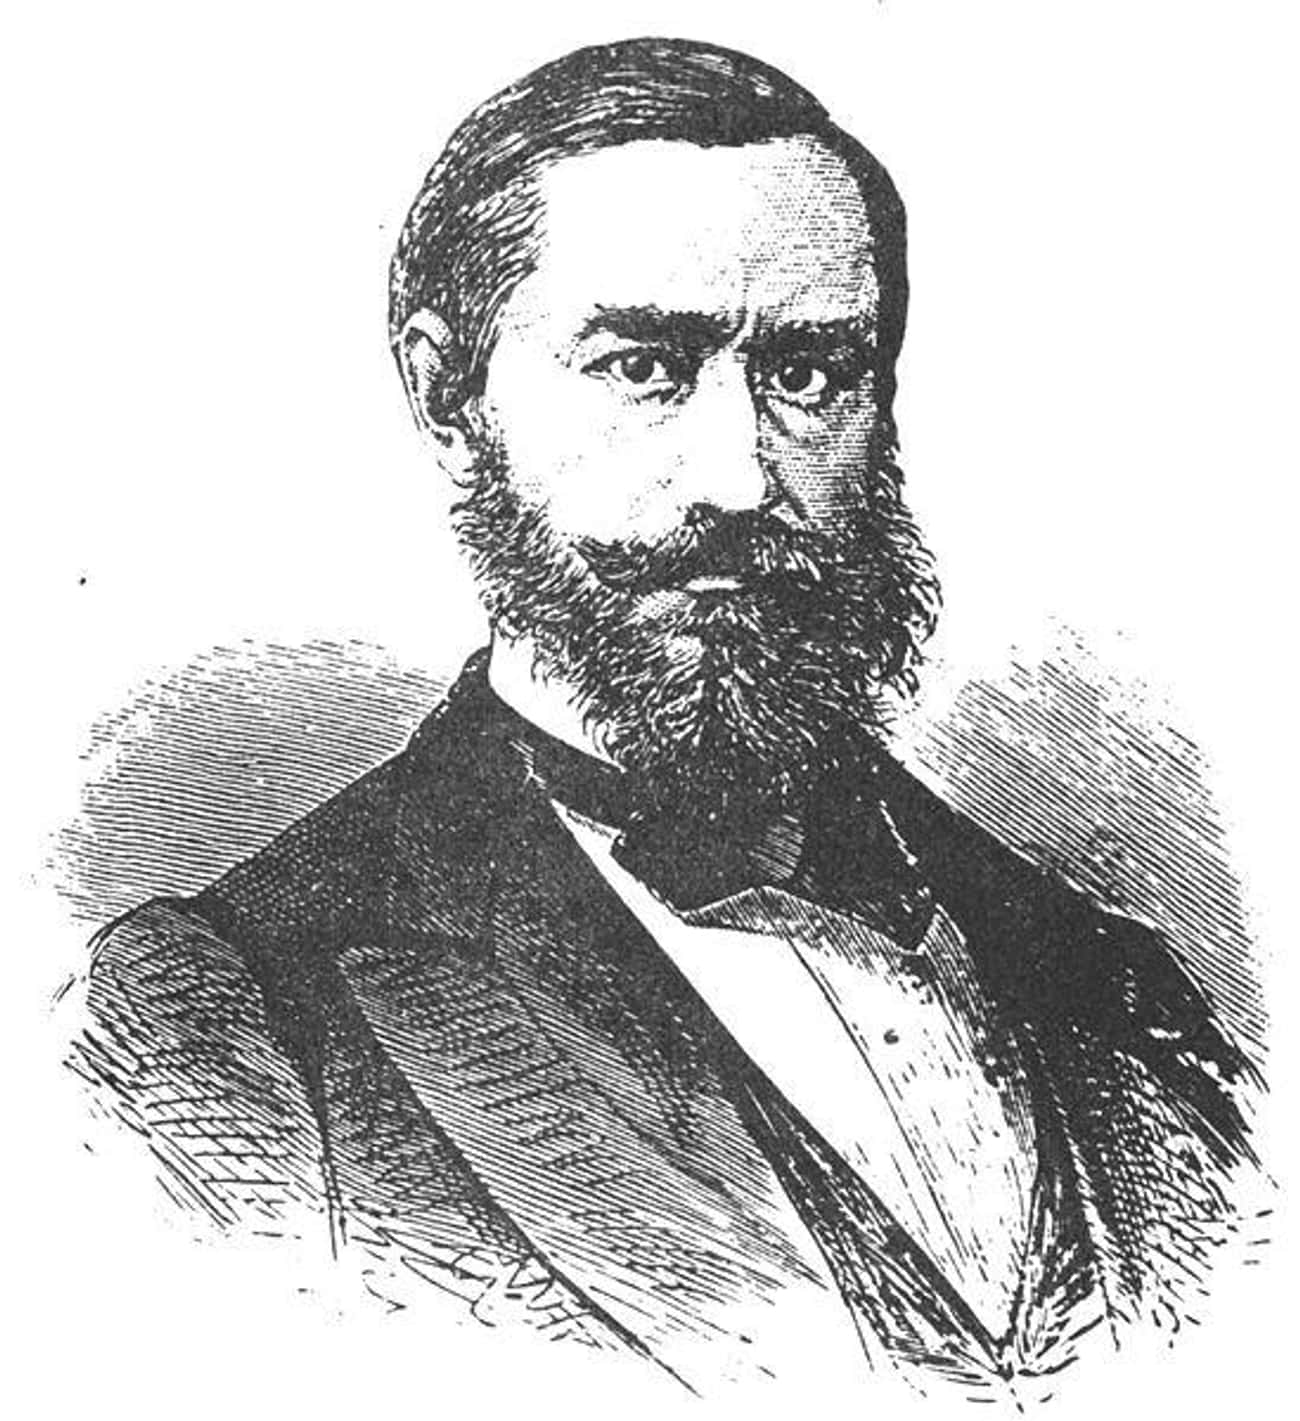 Henri Duveyrier